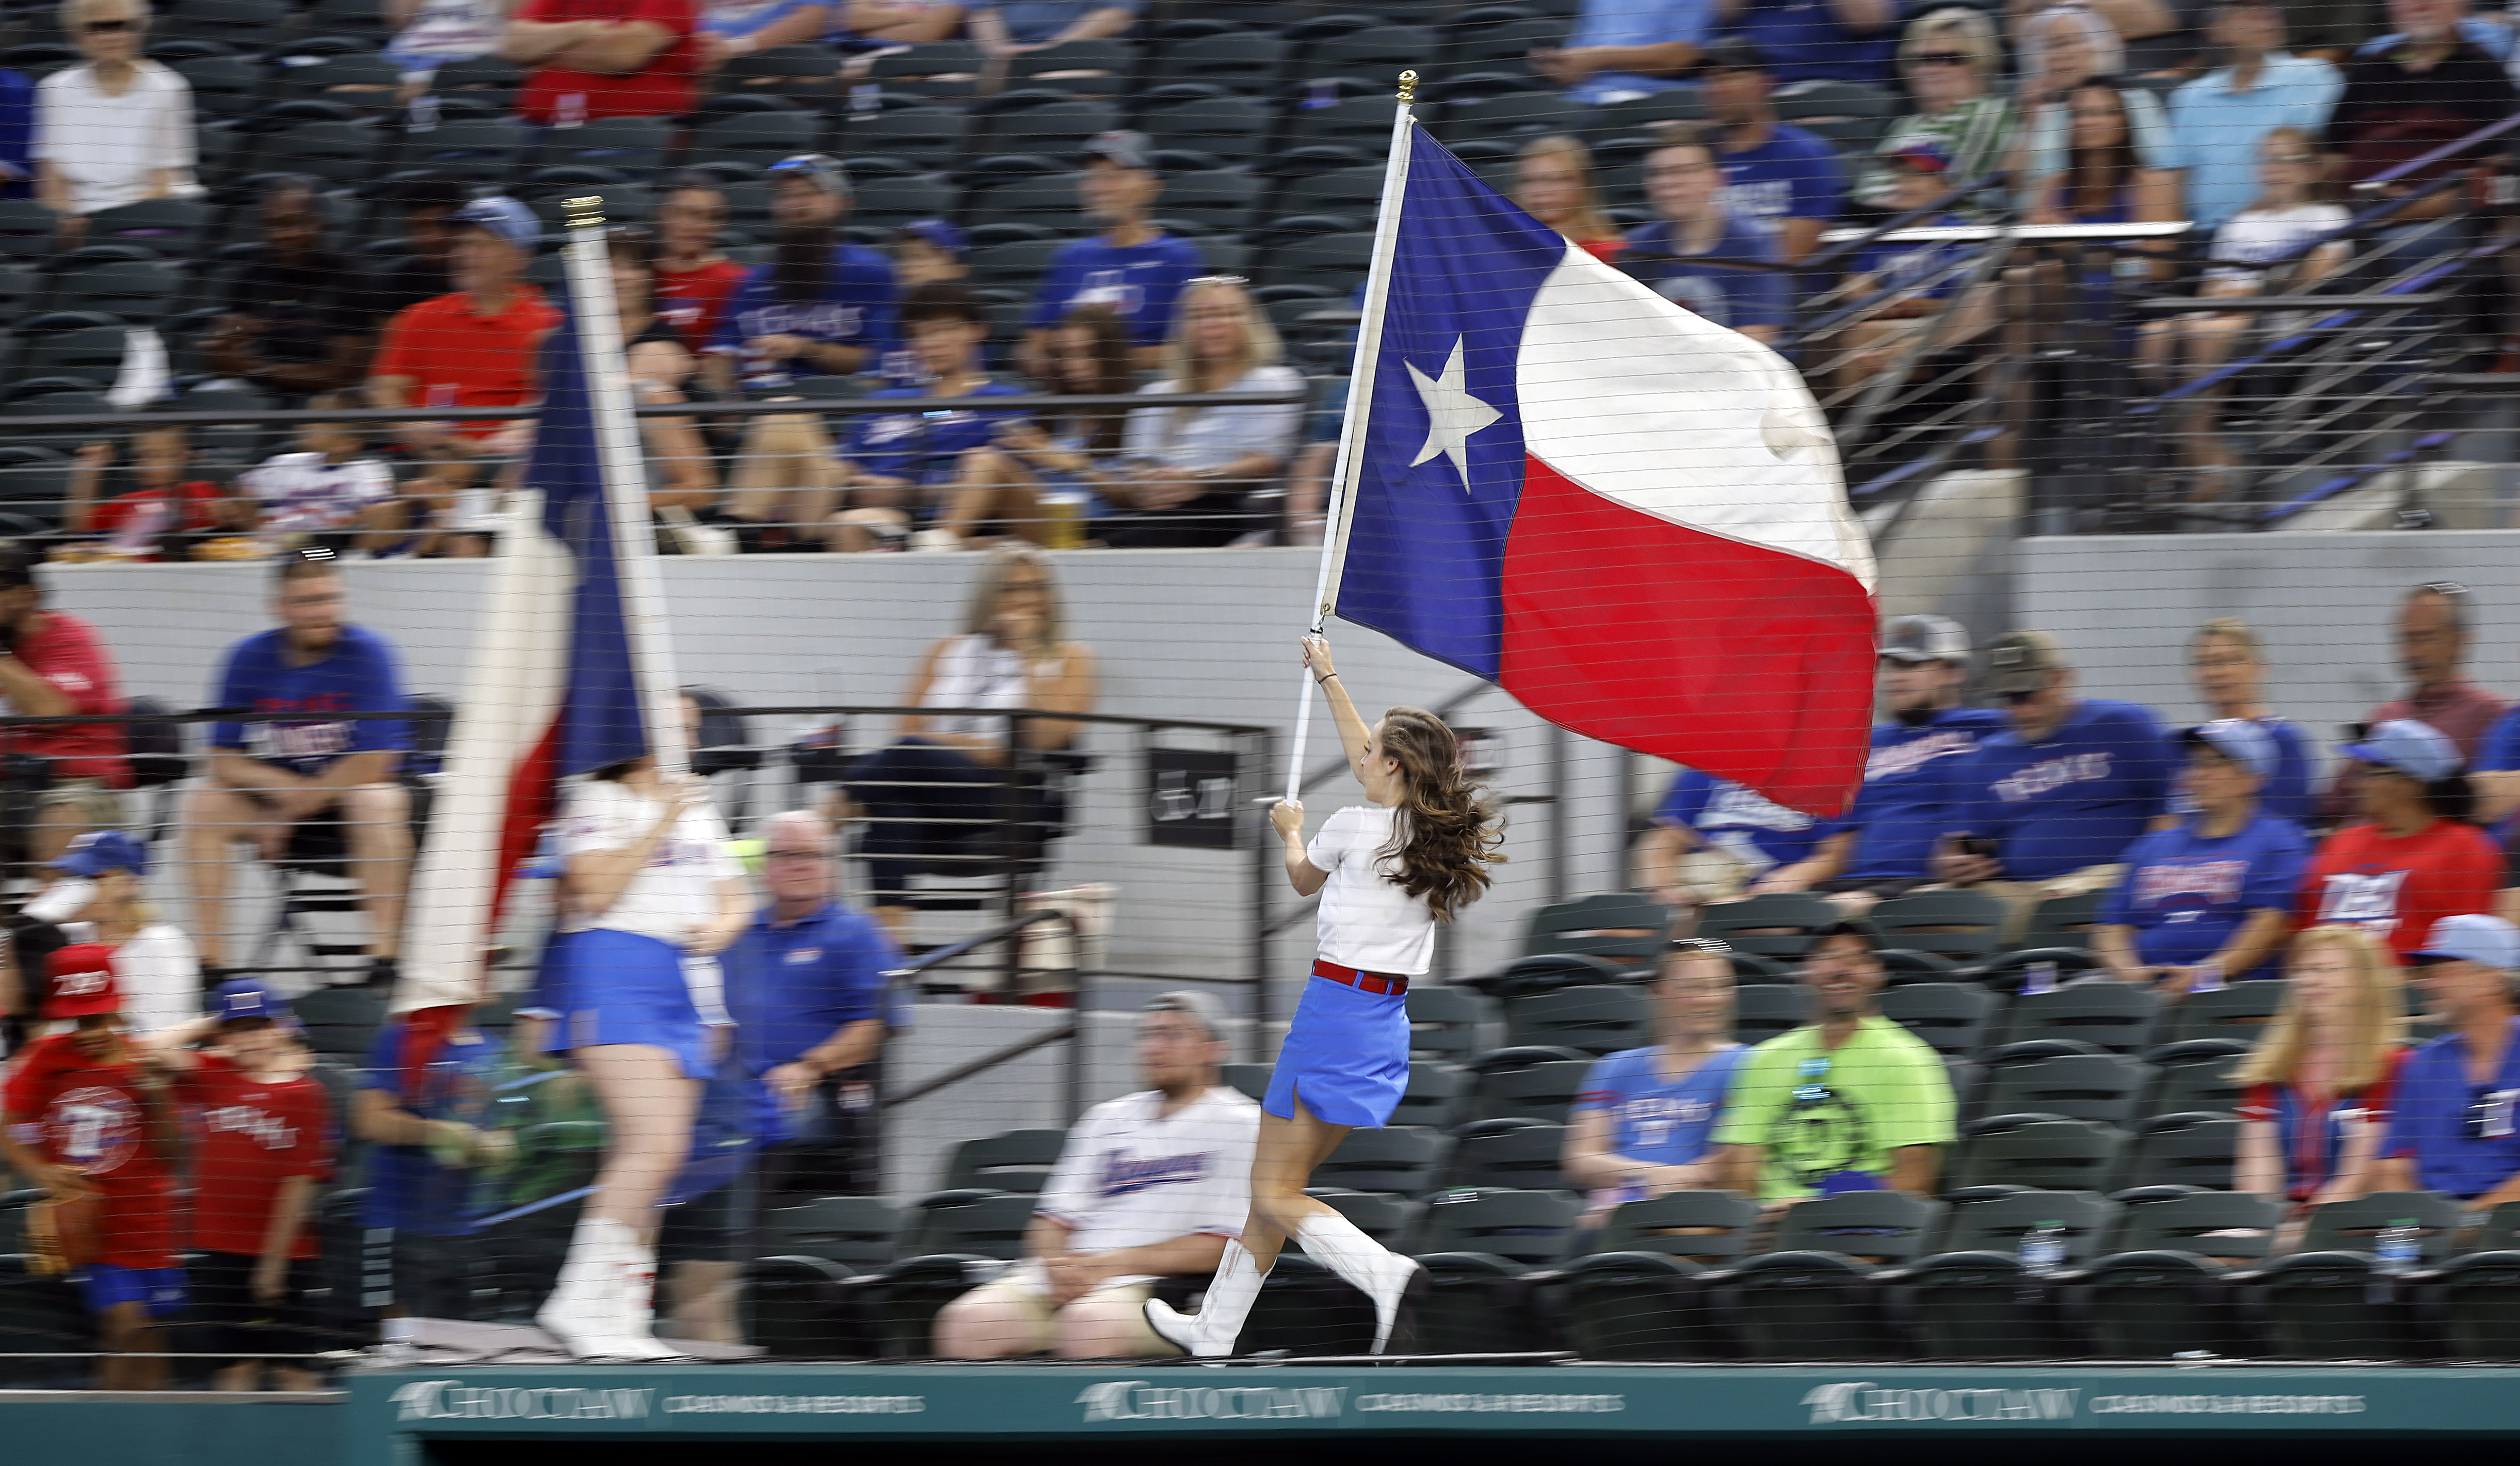 Stars Hangar on X: Did you think the Texas Rangers warm-up